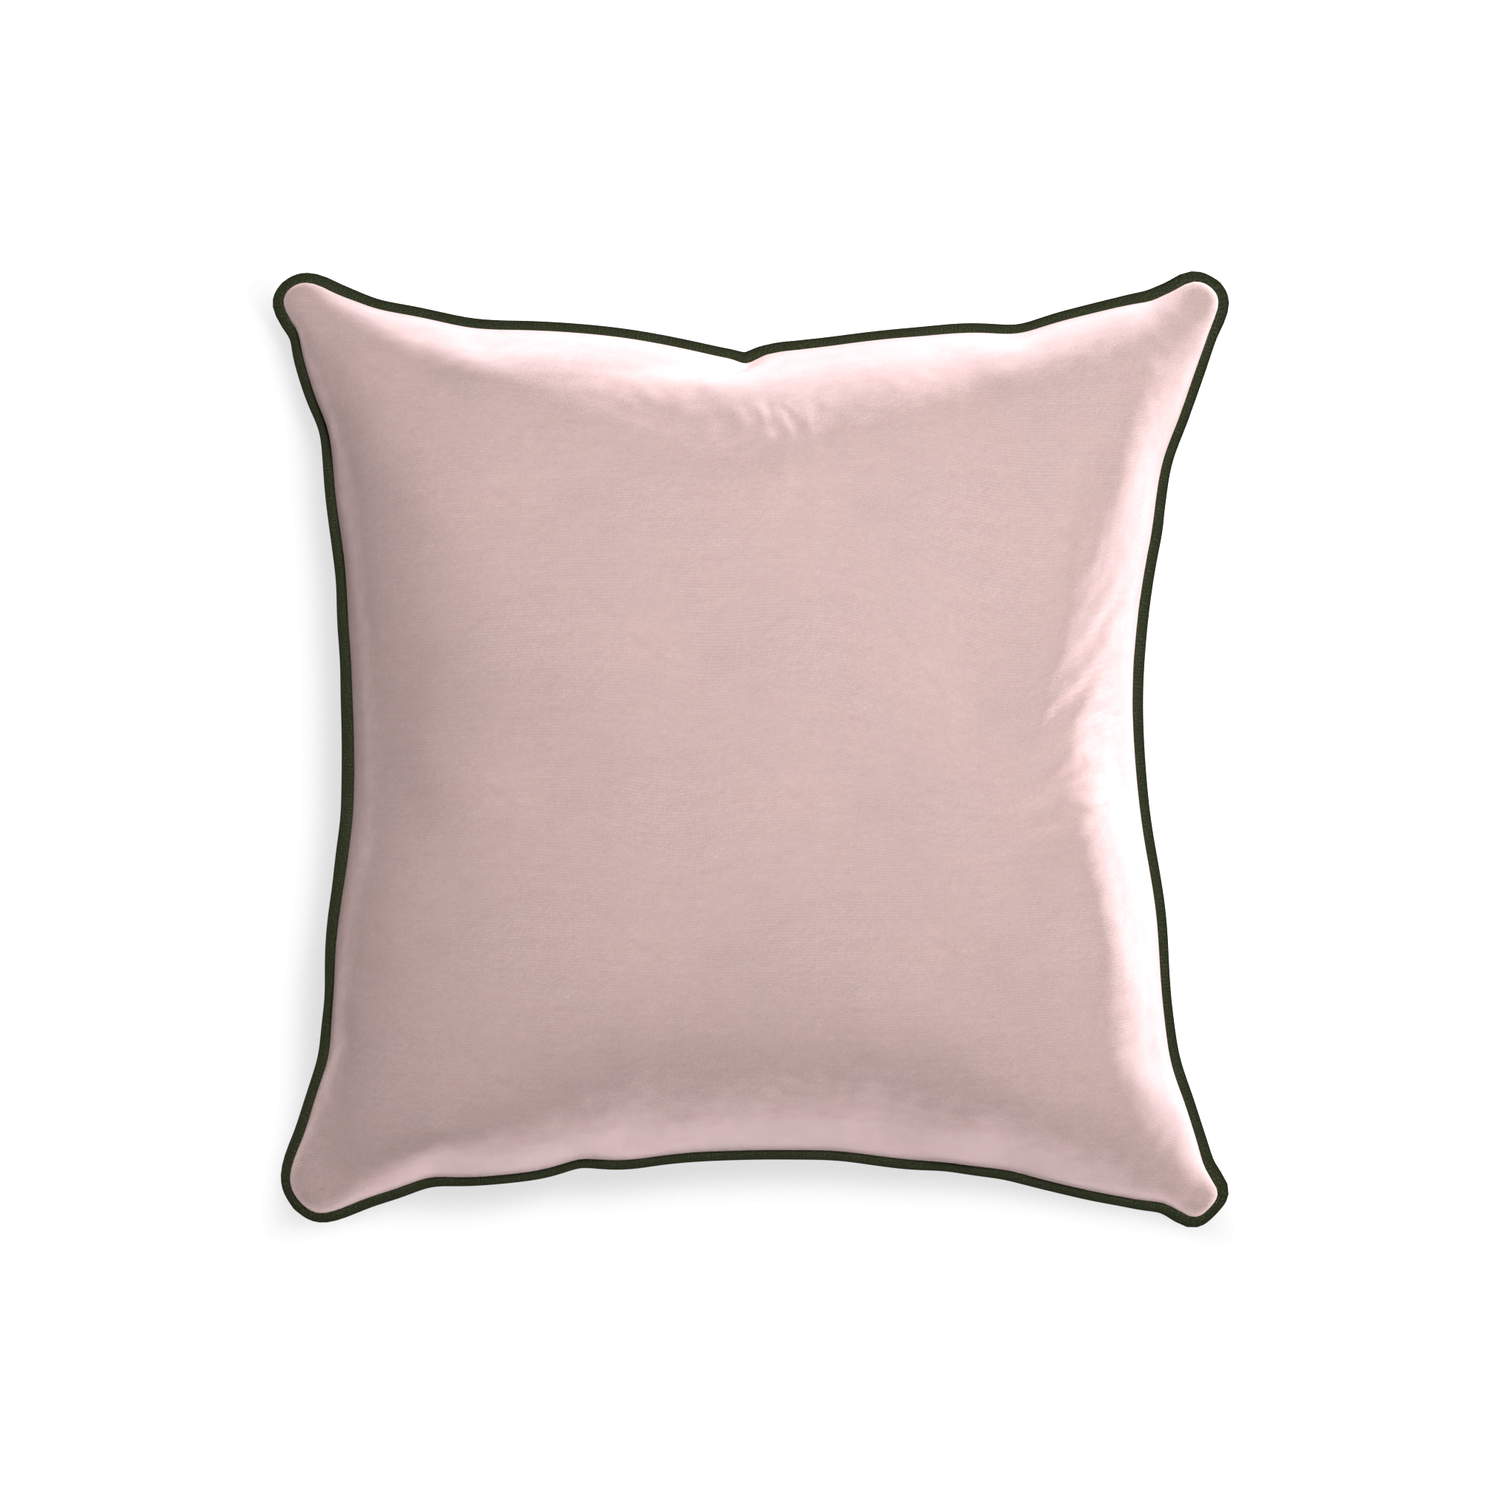 20-square rose velvet custom pillow with f piping on white background